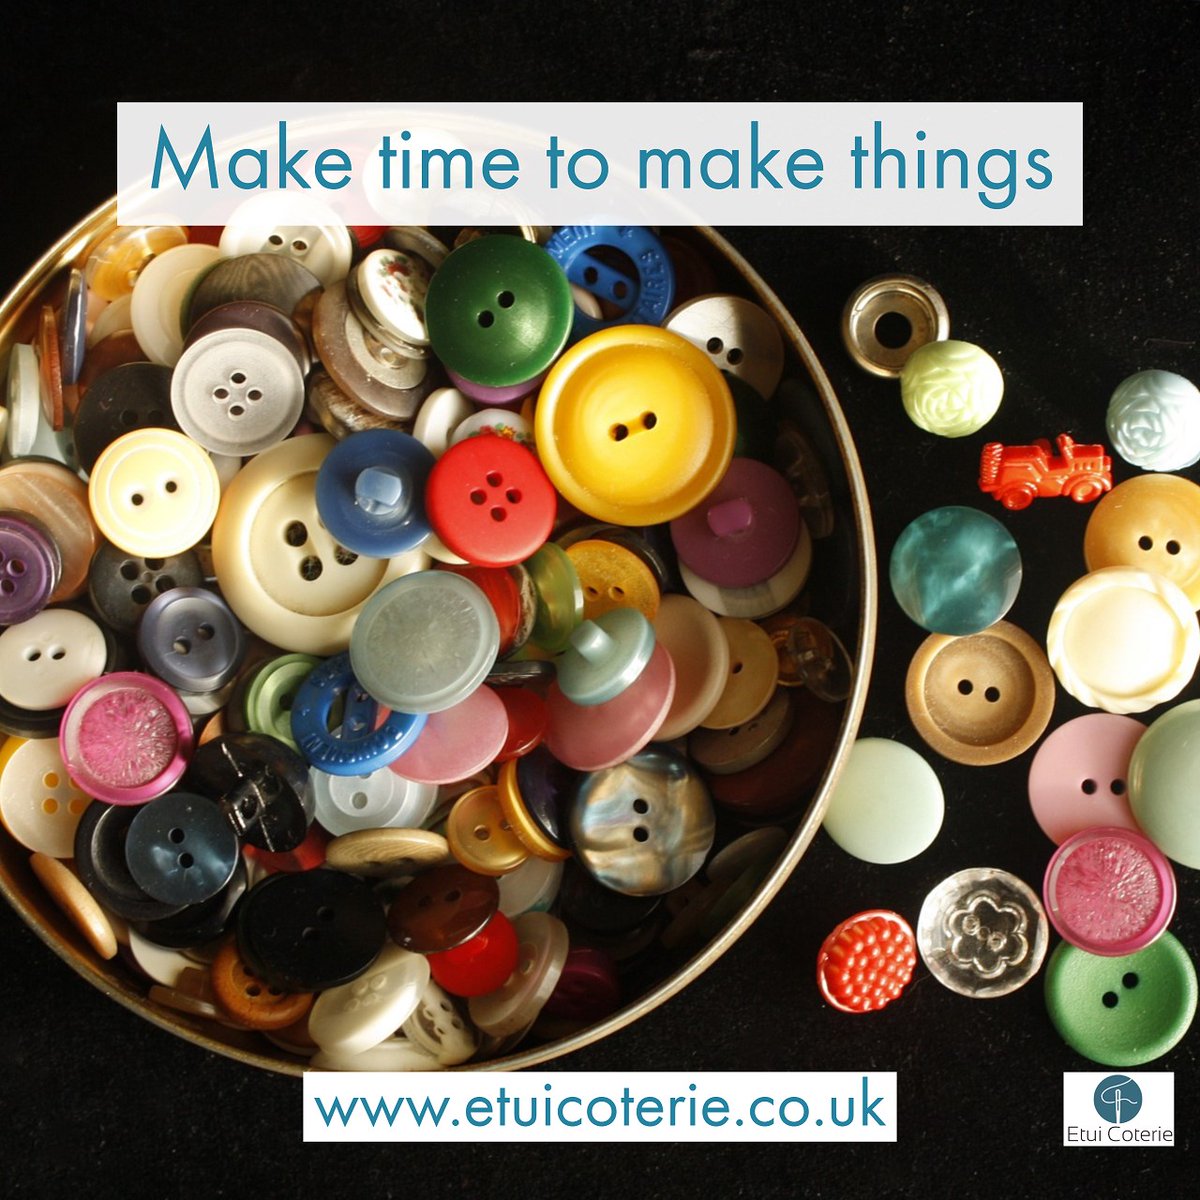 Make time to make things. Creativity keeps you balanced.
#etuicoterie #makethings #getyourcraftyon